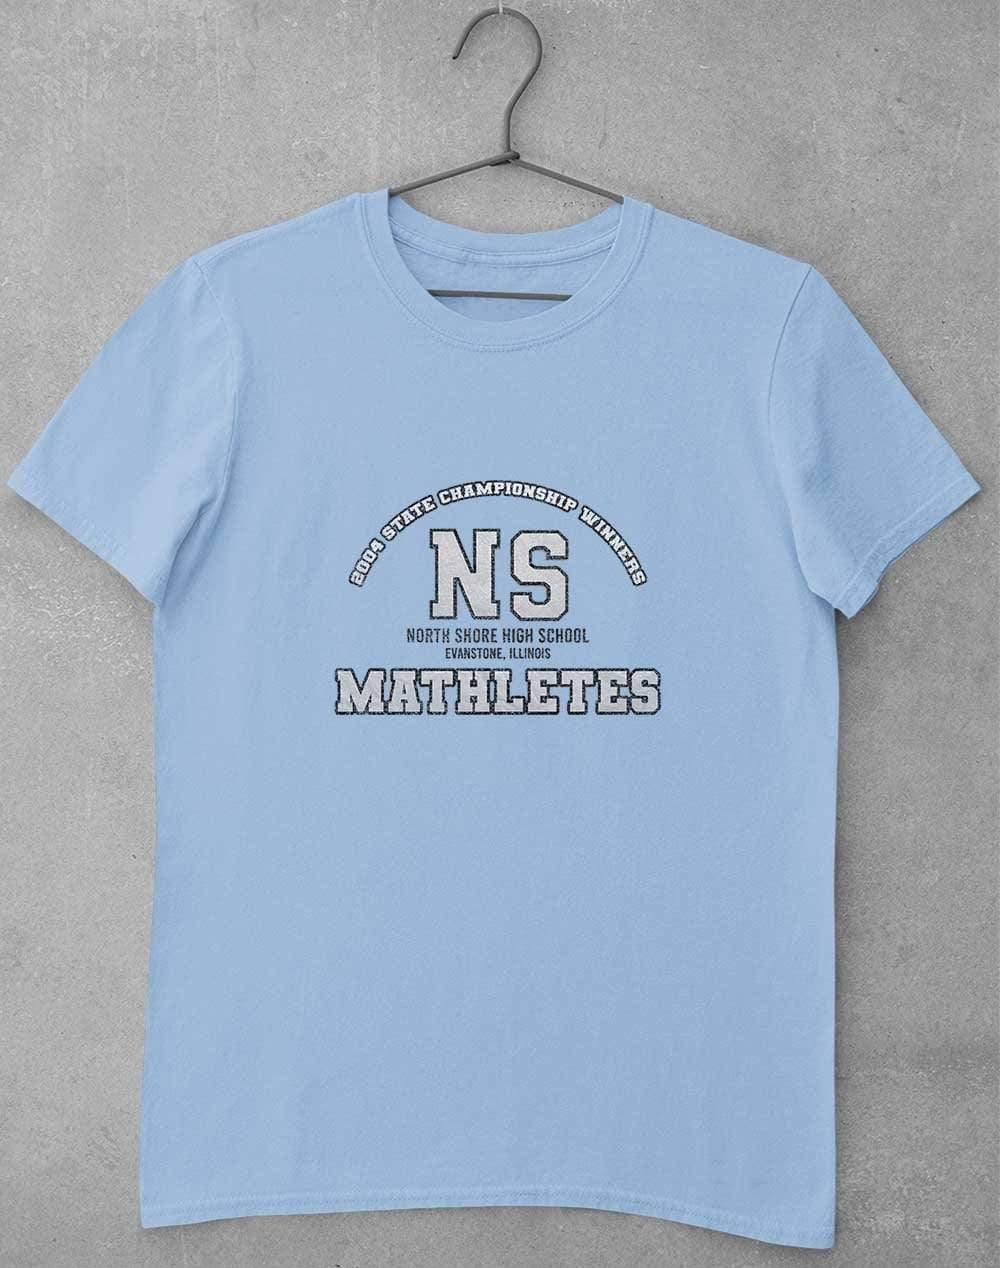 North Shore High School - Mathletes T-Shirt S / Light Blue  - Off World Tees